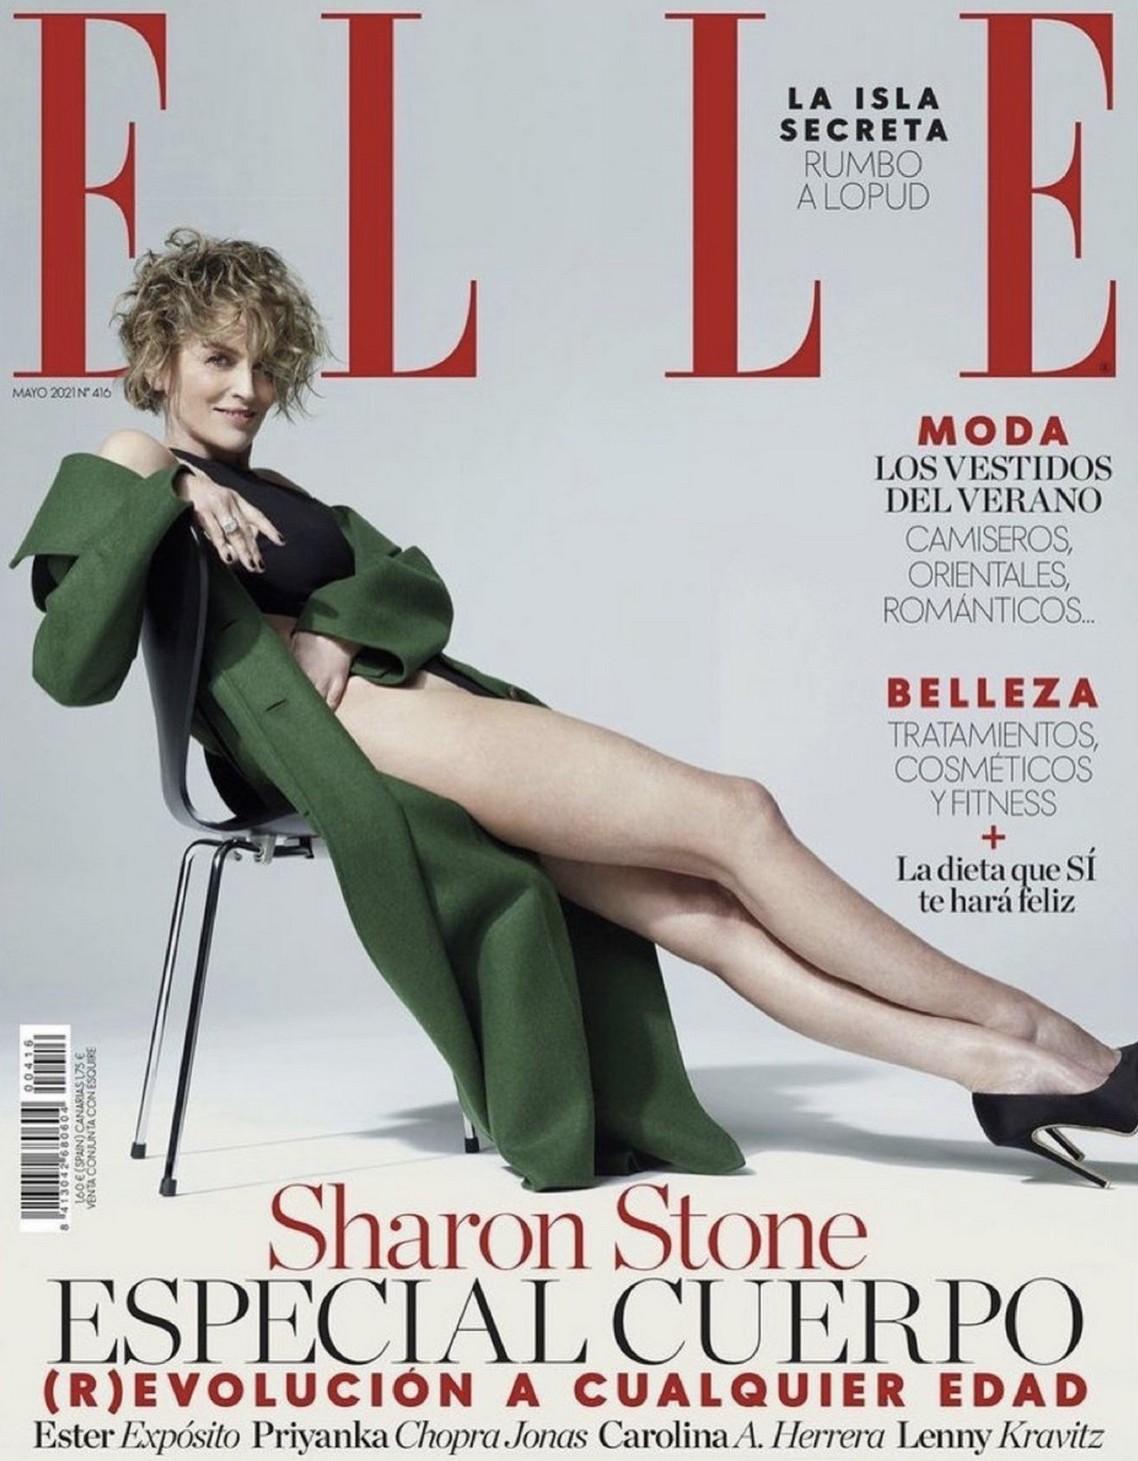 Sharon Stone Sexy Legs 2021